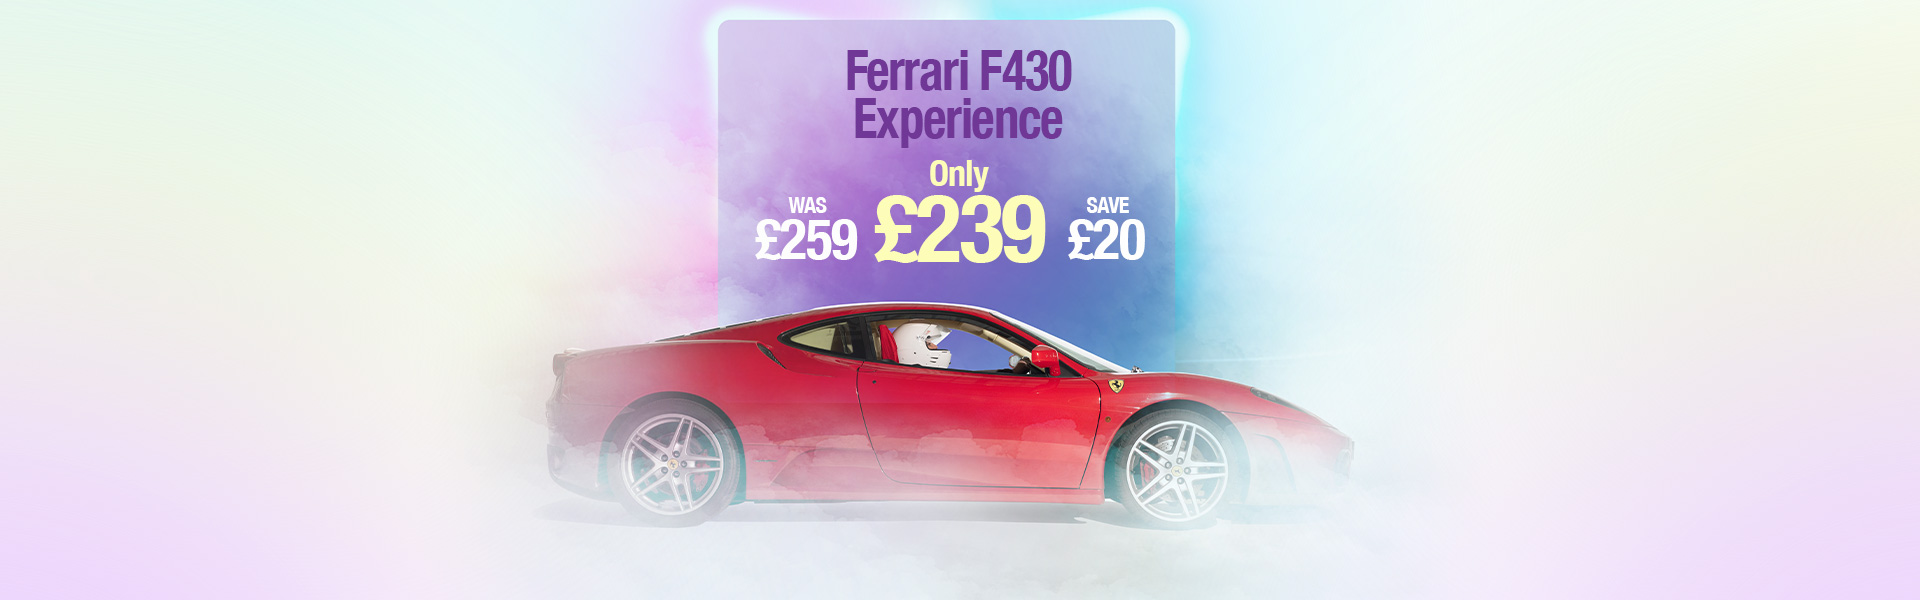 Ferrari F430 Experience